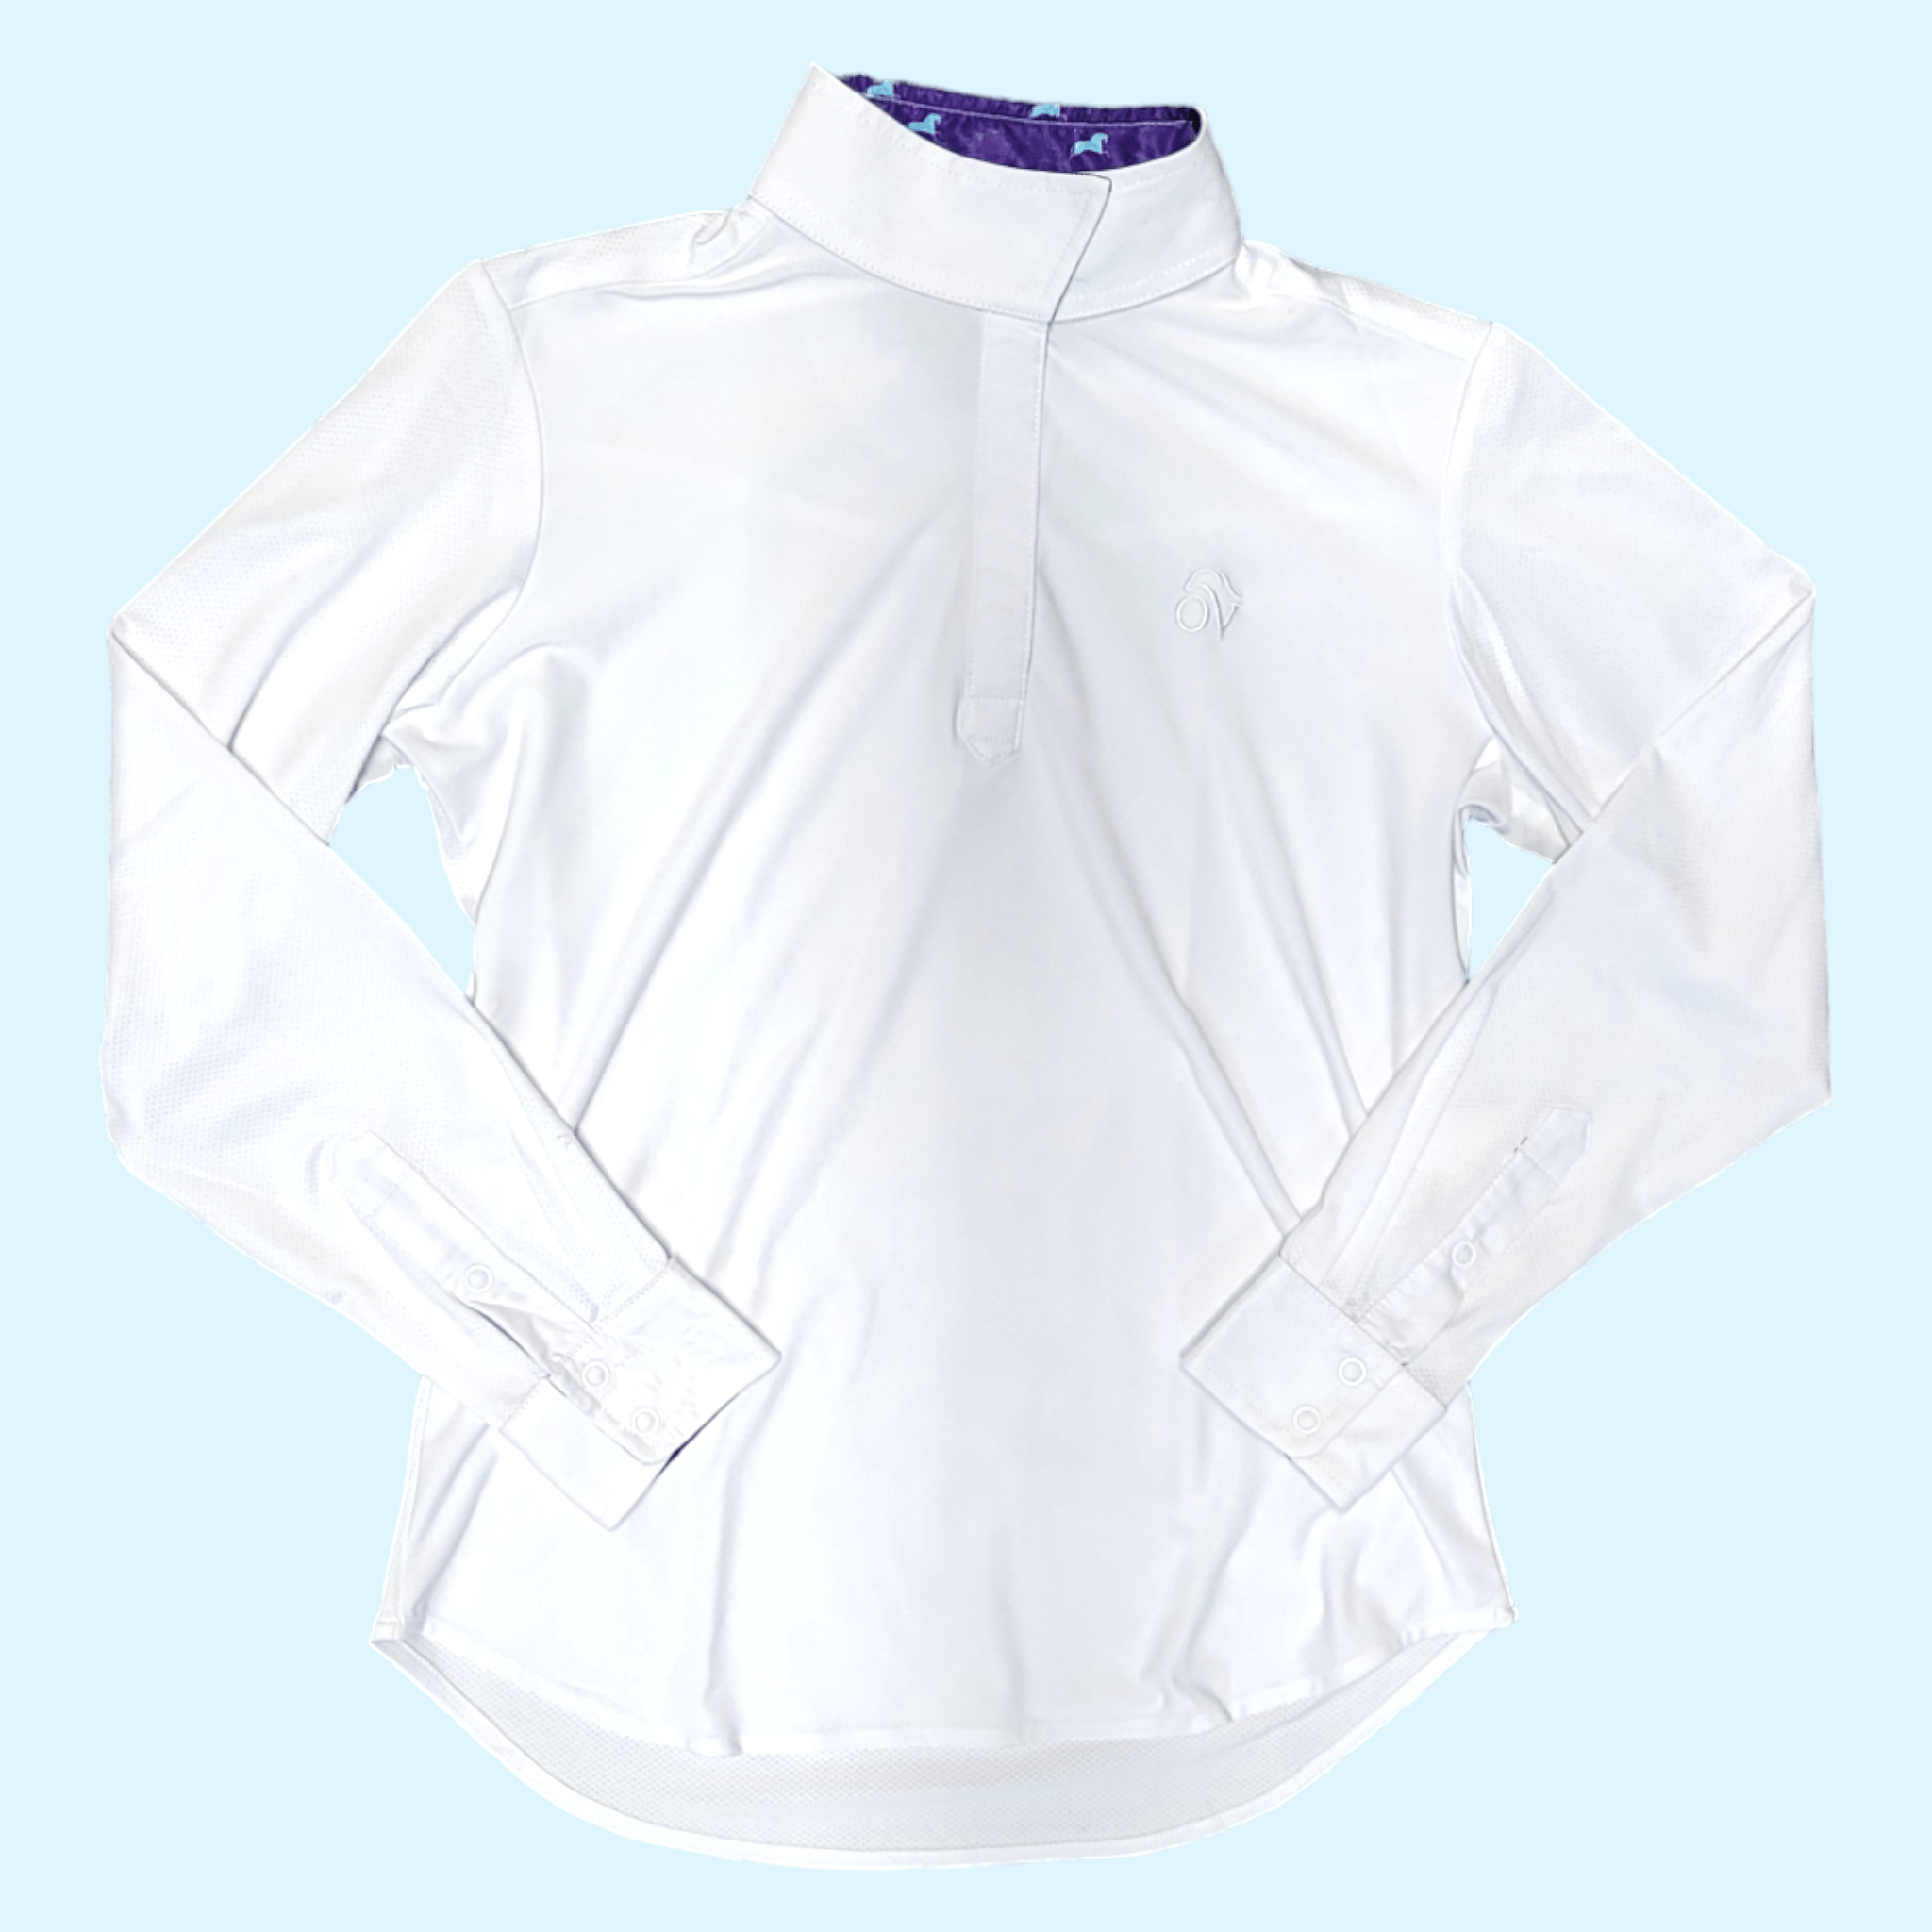 Ovation Girls' Ellie II DX Long Sleeve Show Shirt in White/Purple/Teal - 12